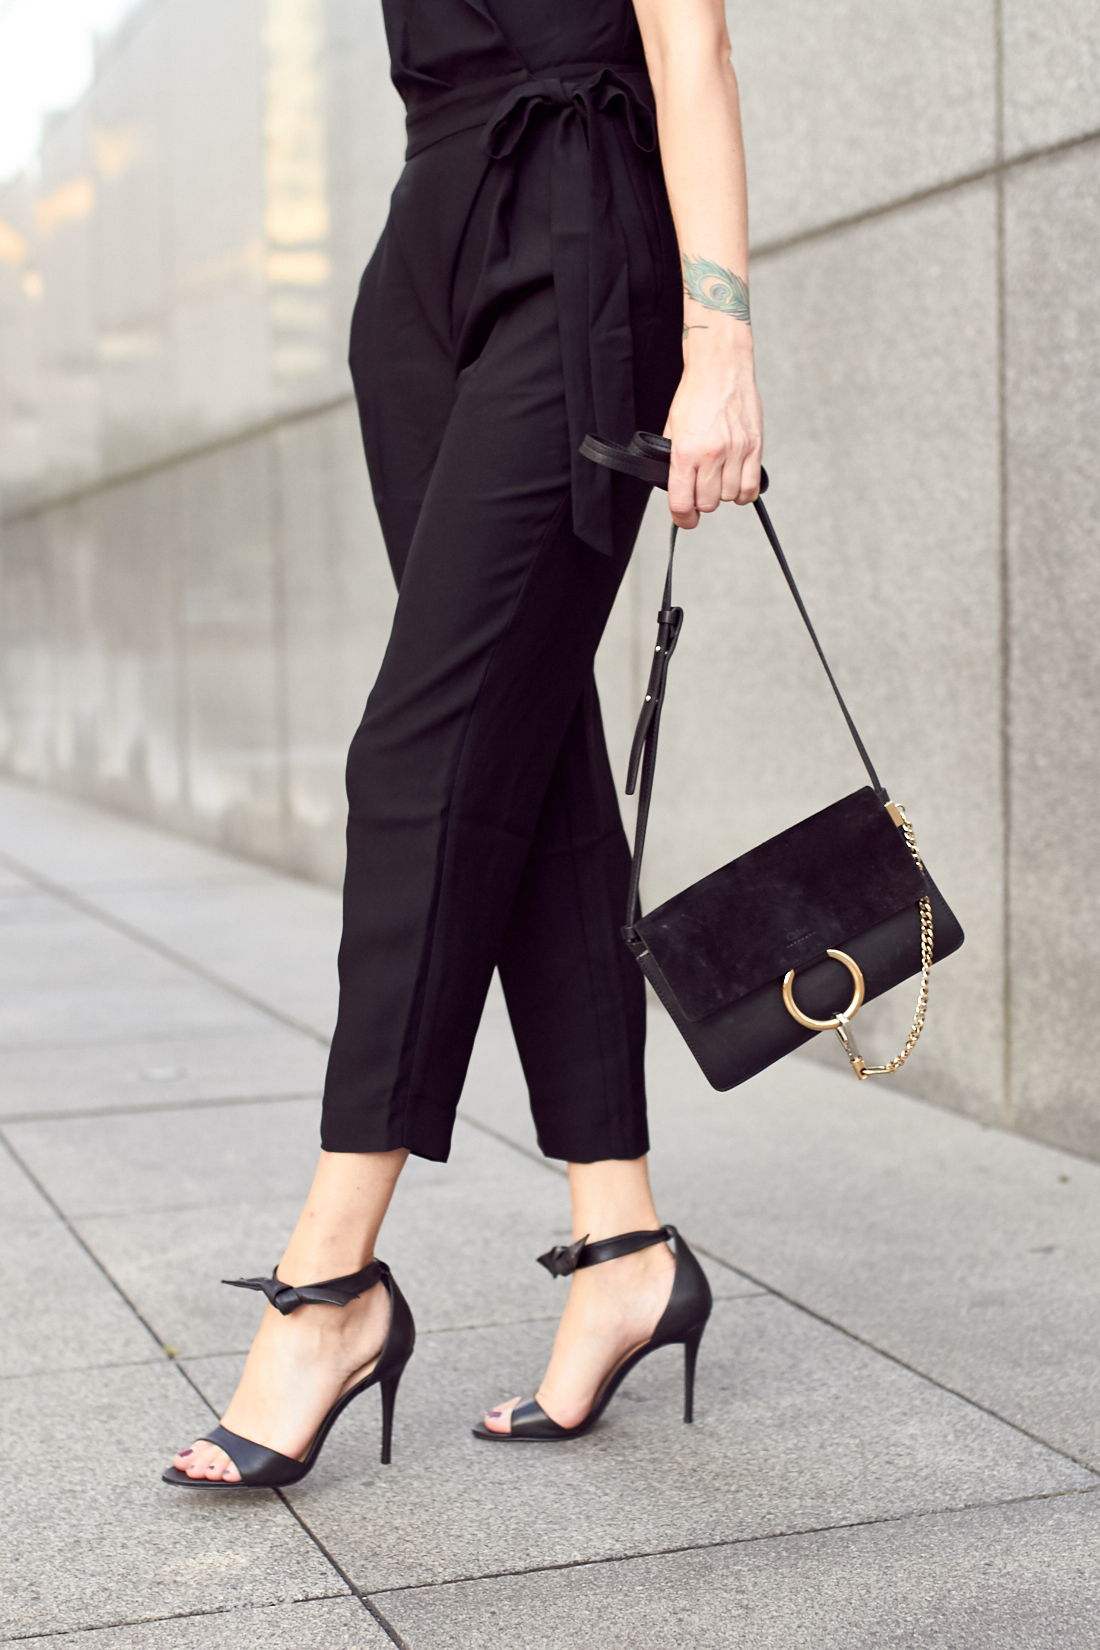 fashion-jackson-chloe-drew-handbag-steve-madden-bowwtie-heels